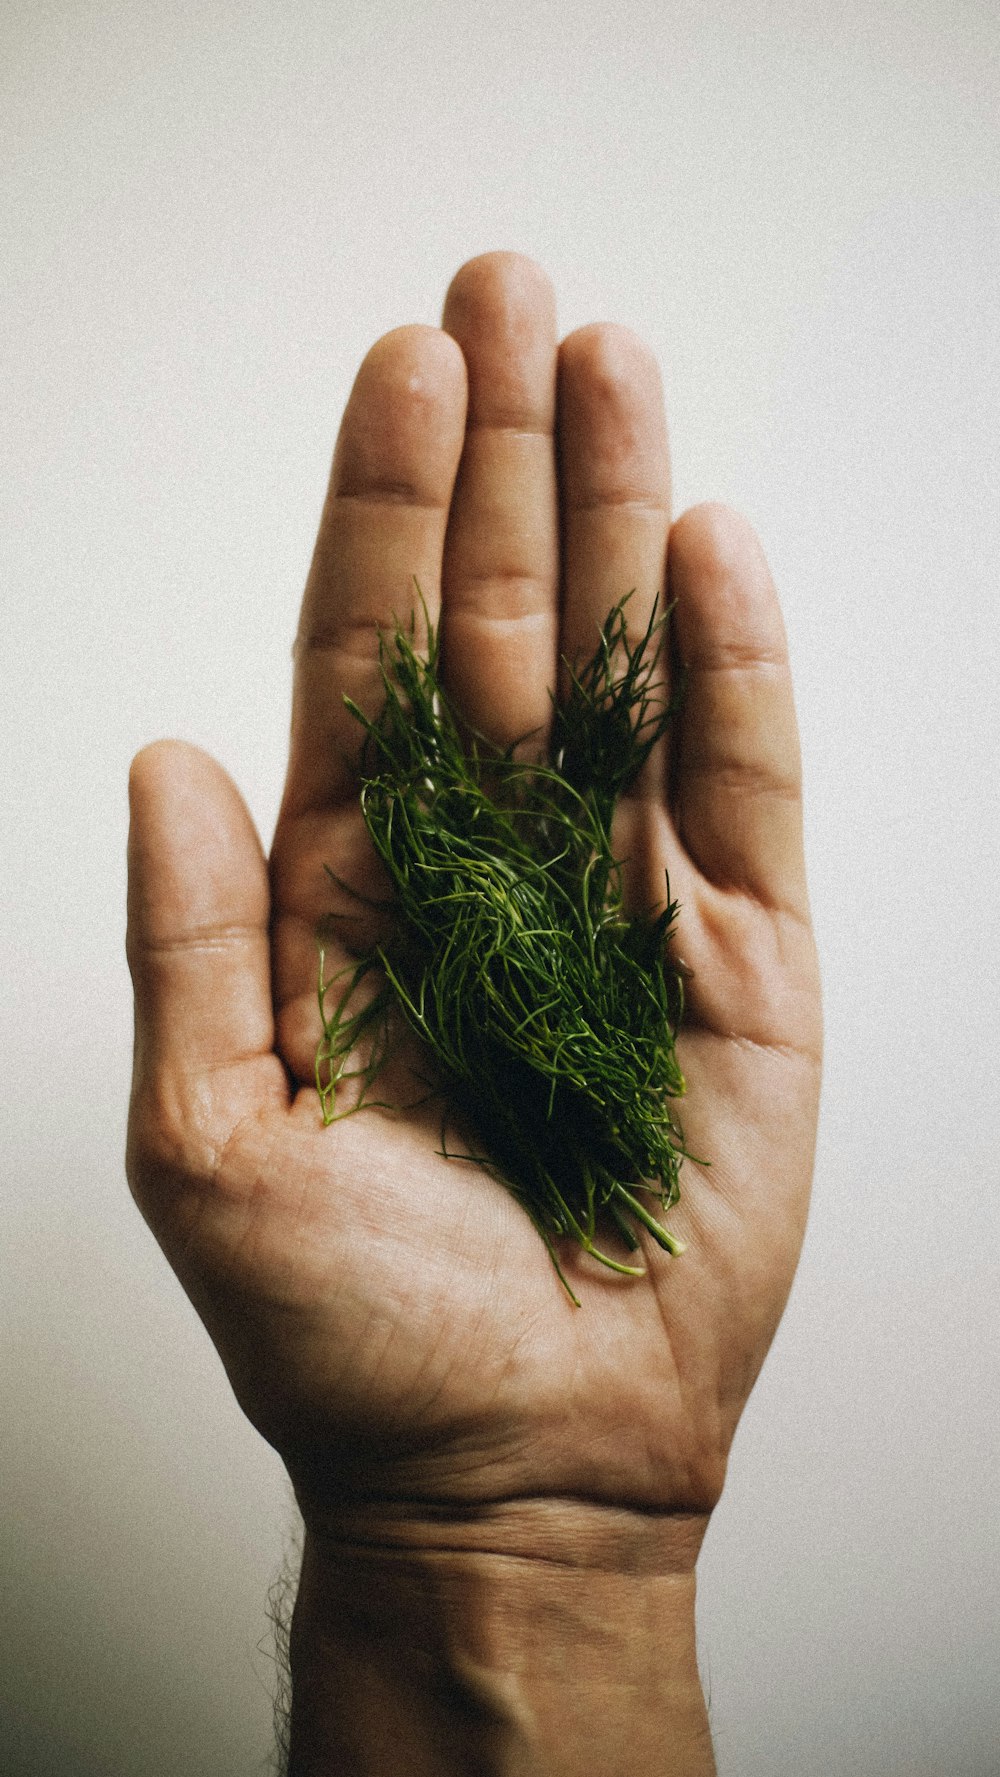 a hand holding a bunch of green grass